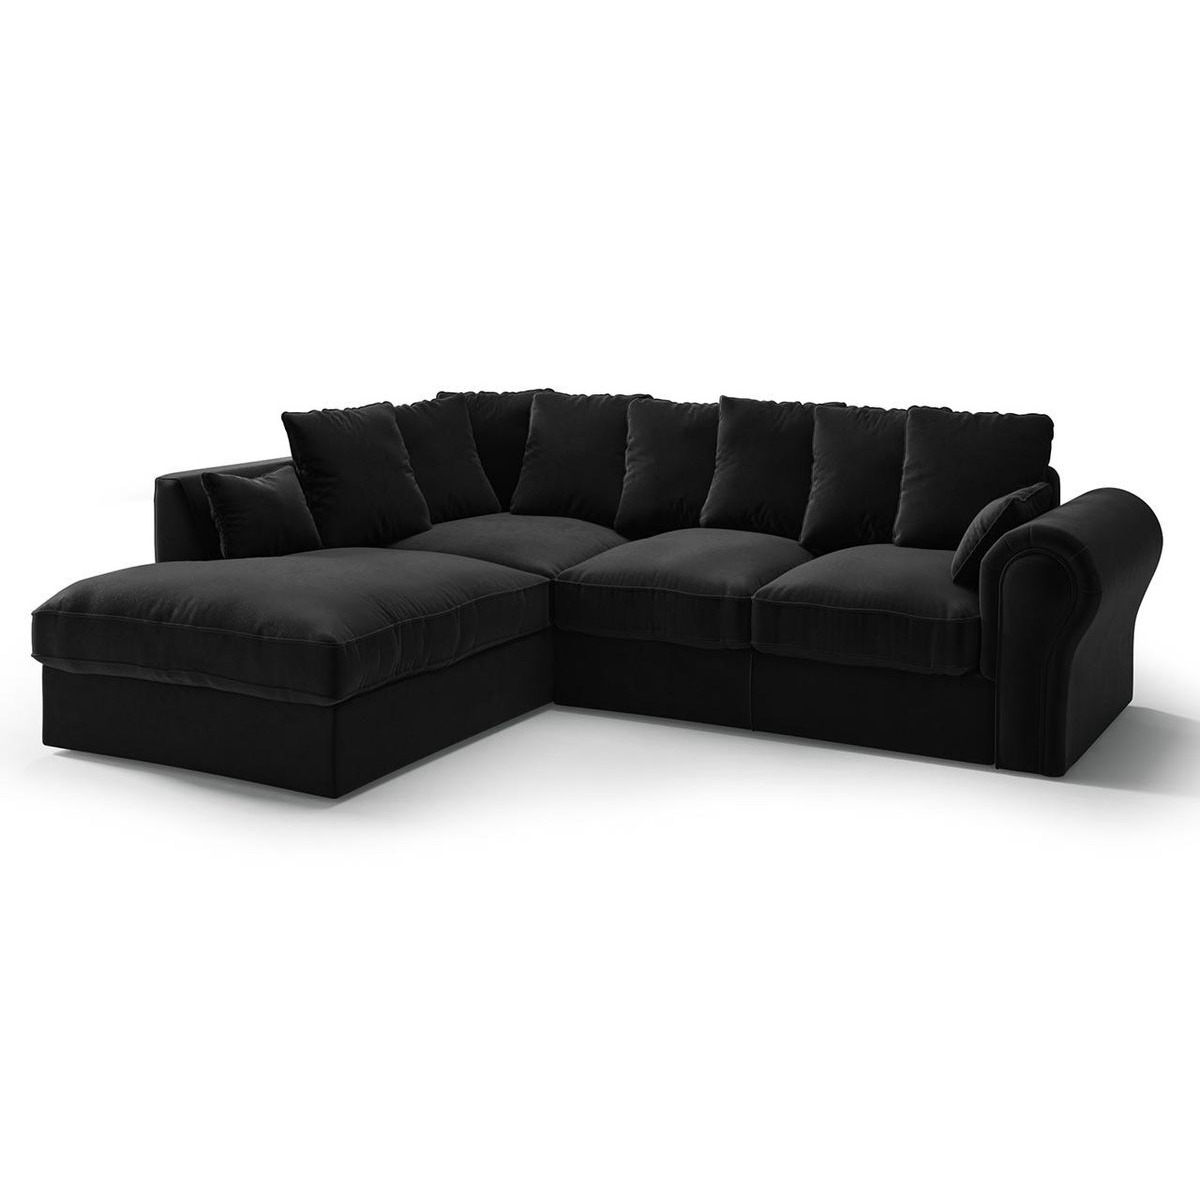 Baron Left Hand Corner Sofa, black - image 1